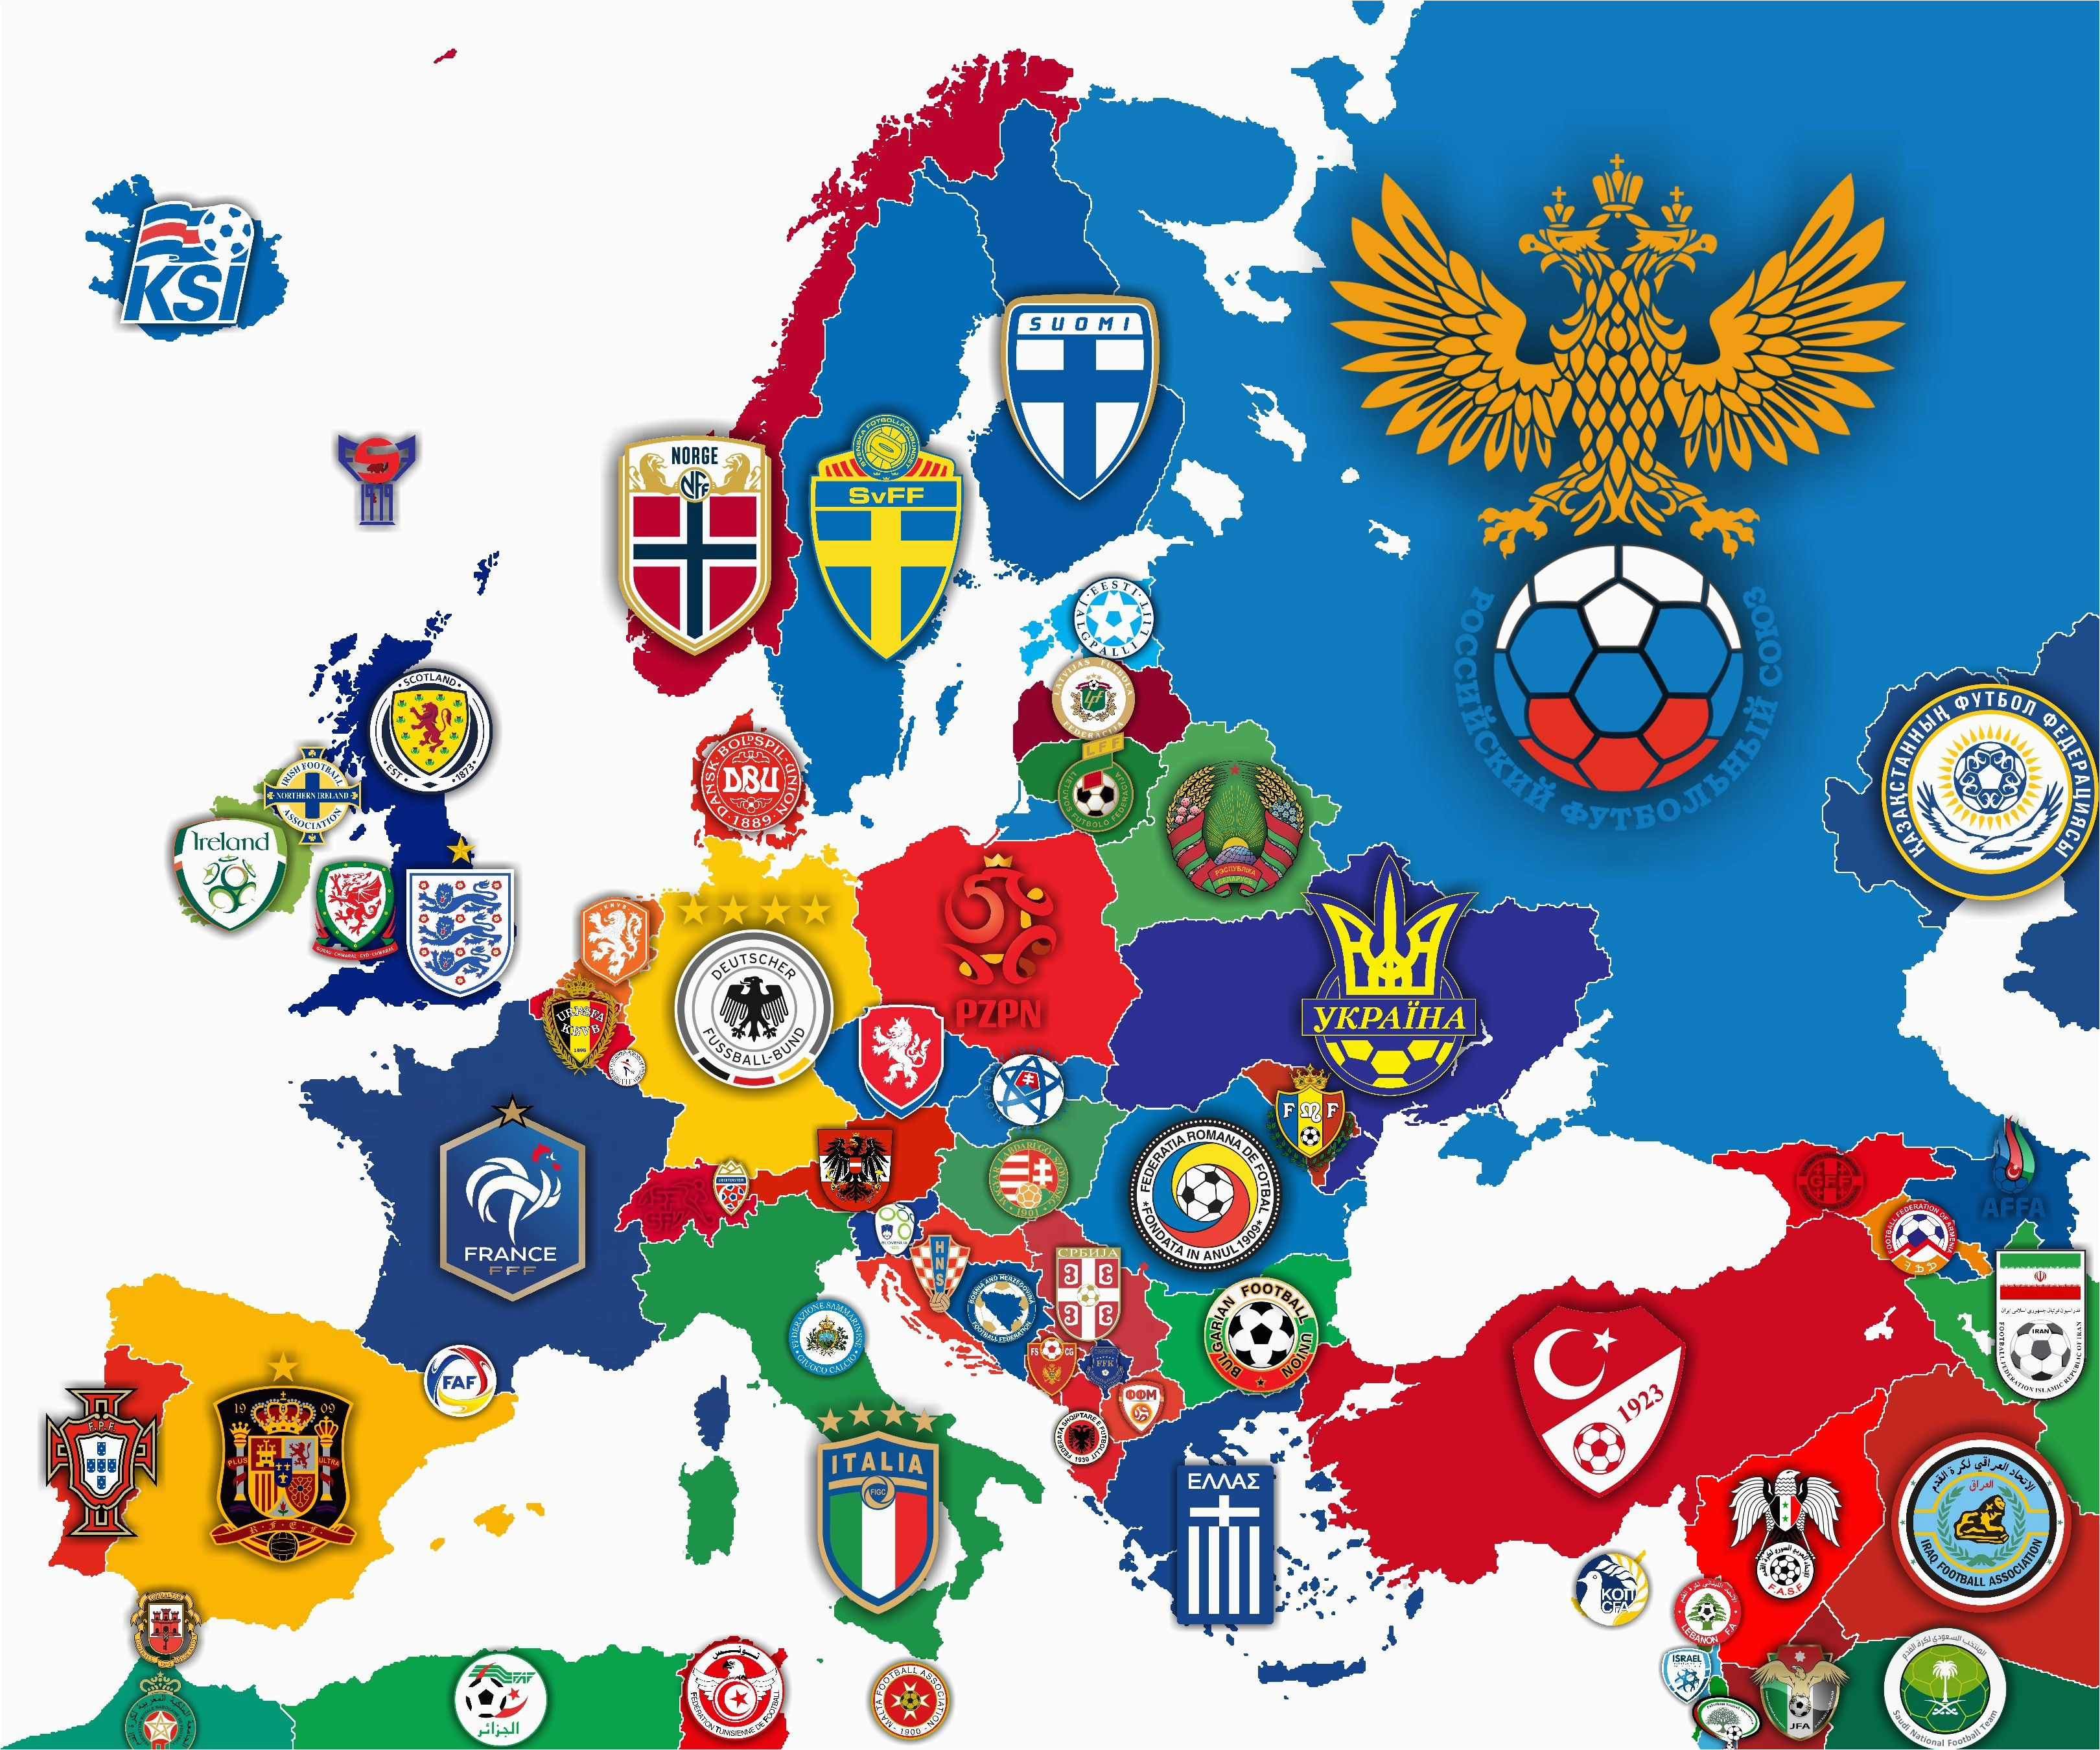 logos of national football teams in europe surrounding